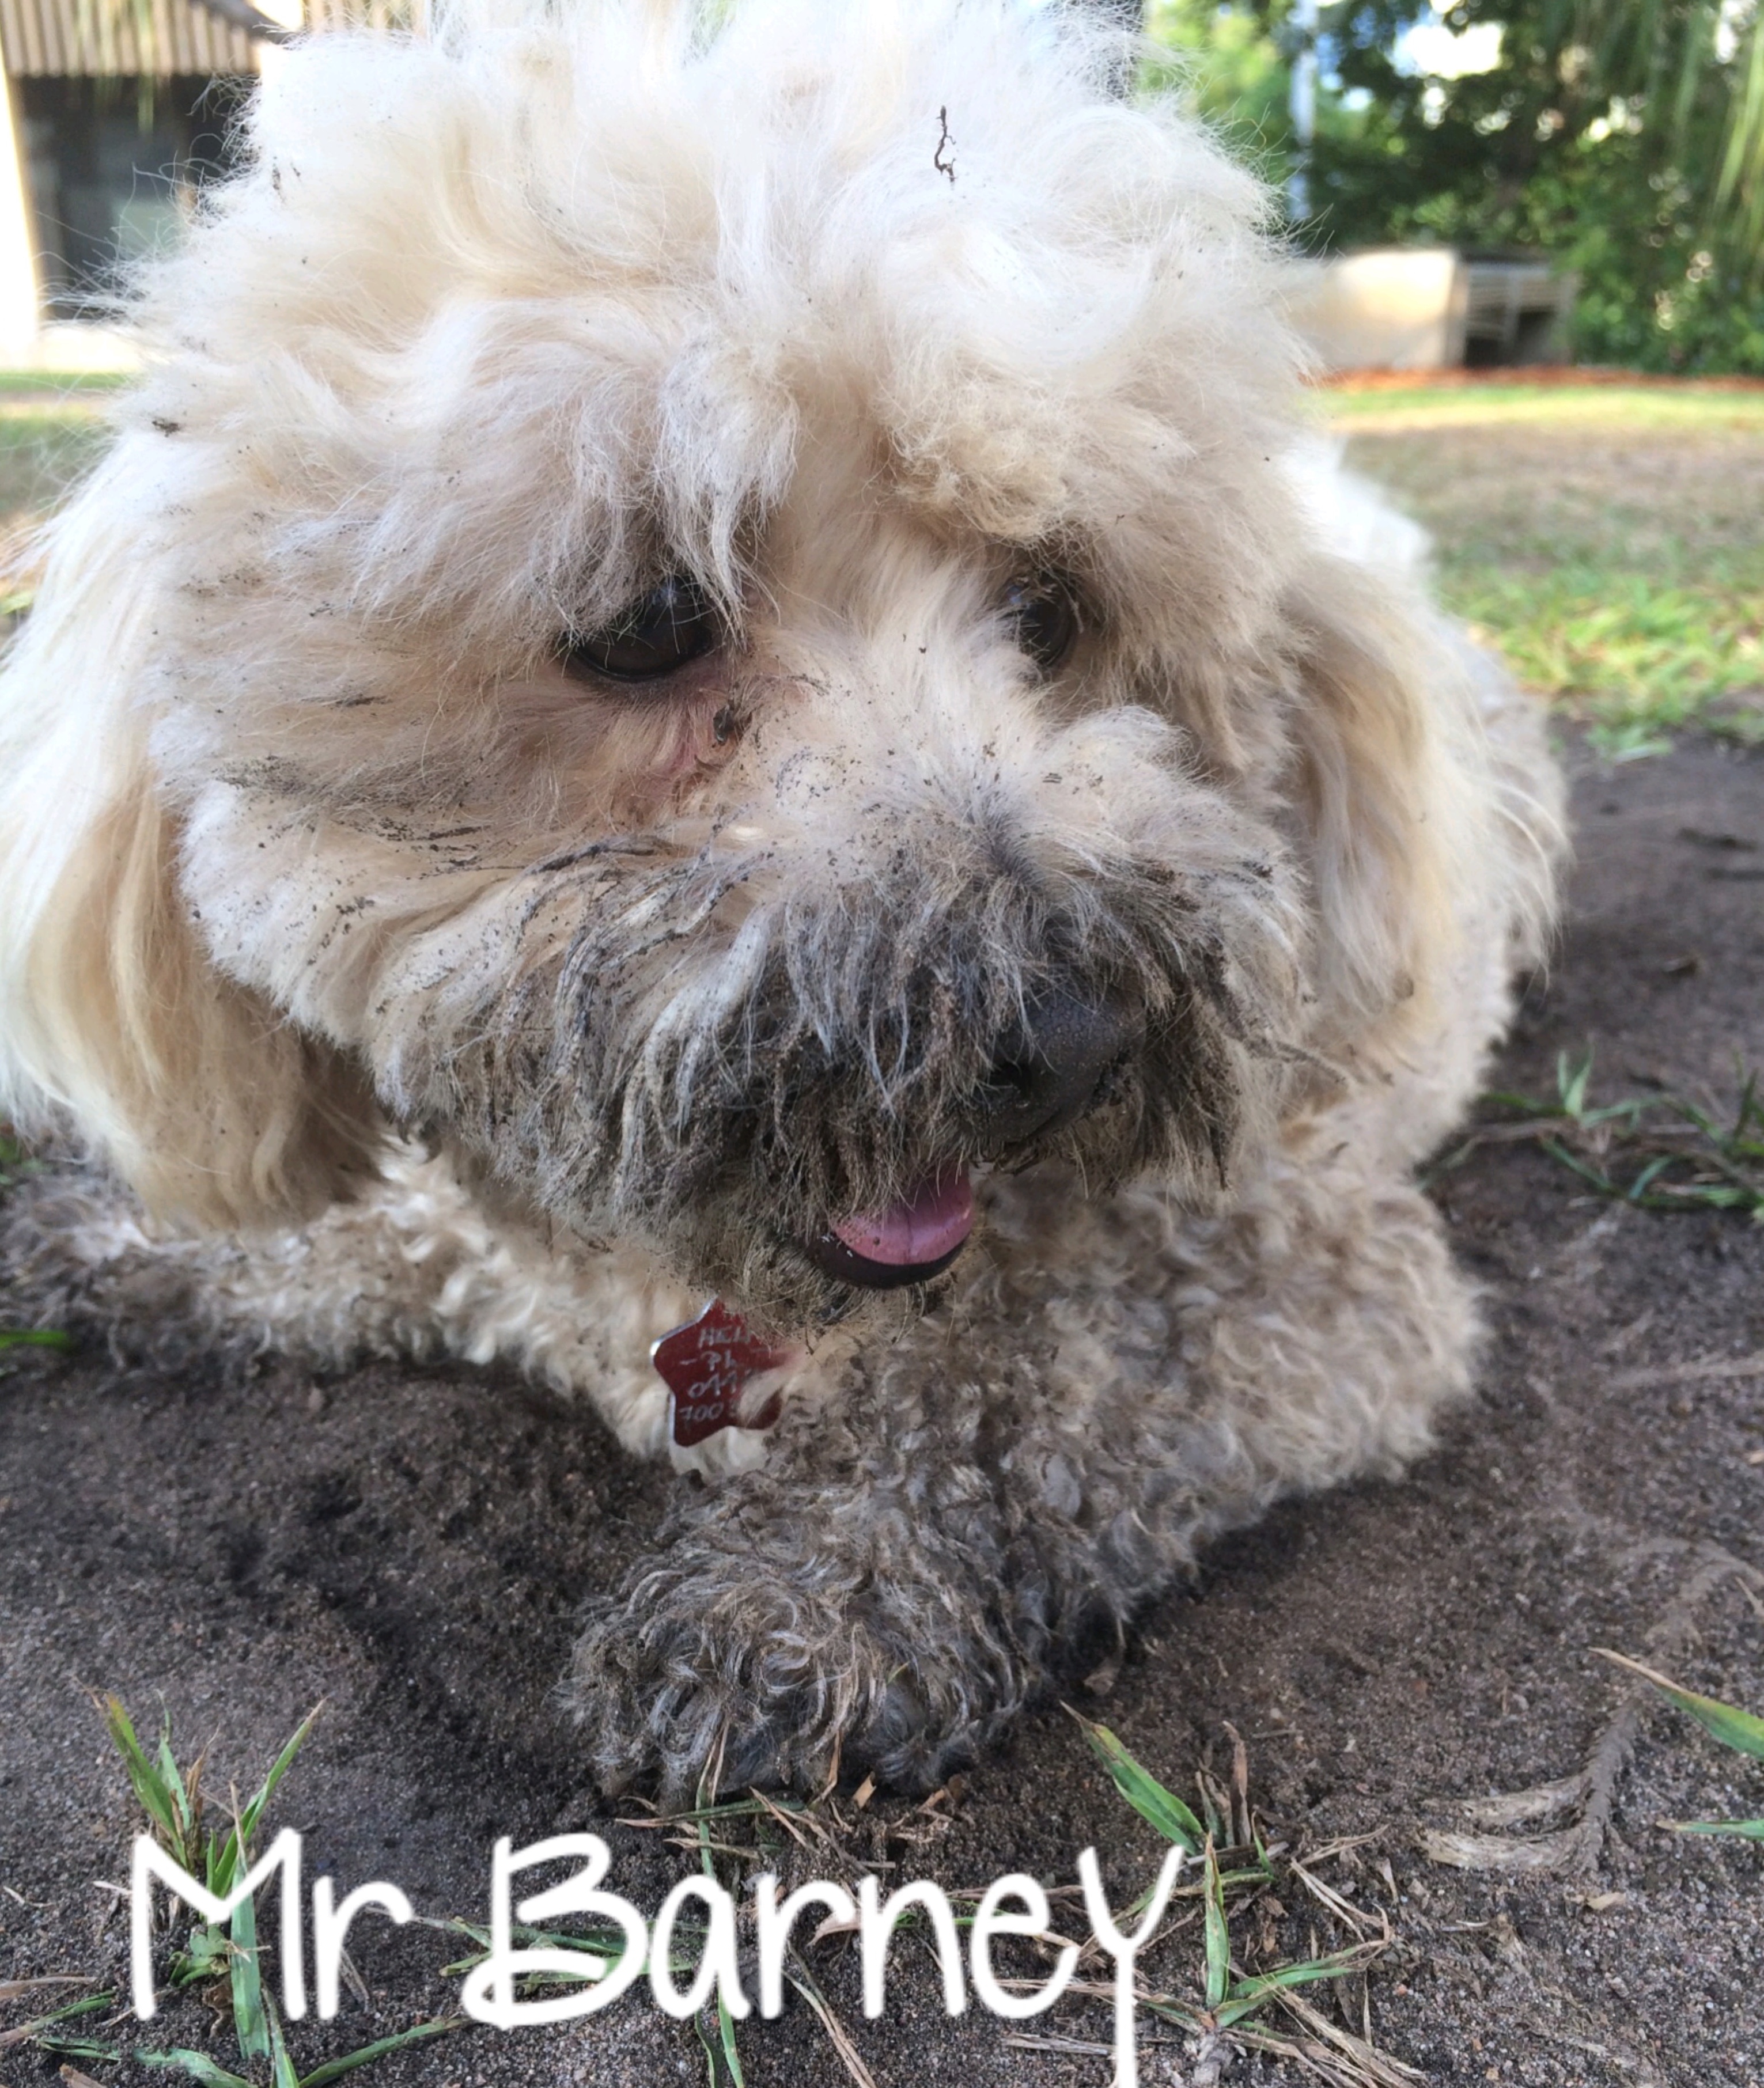 Mr Barney Gets down & dirty